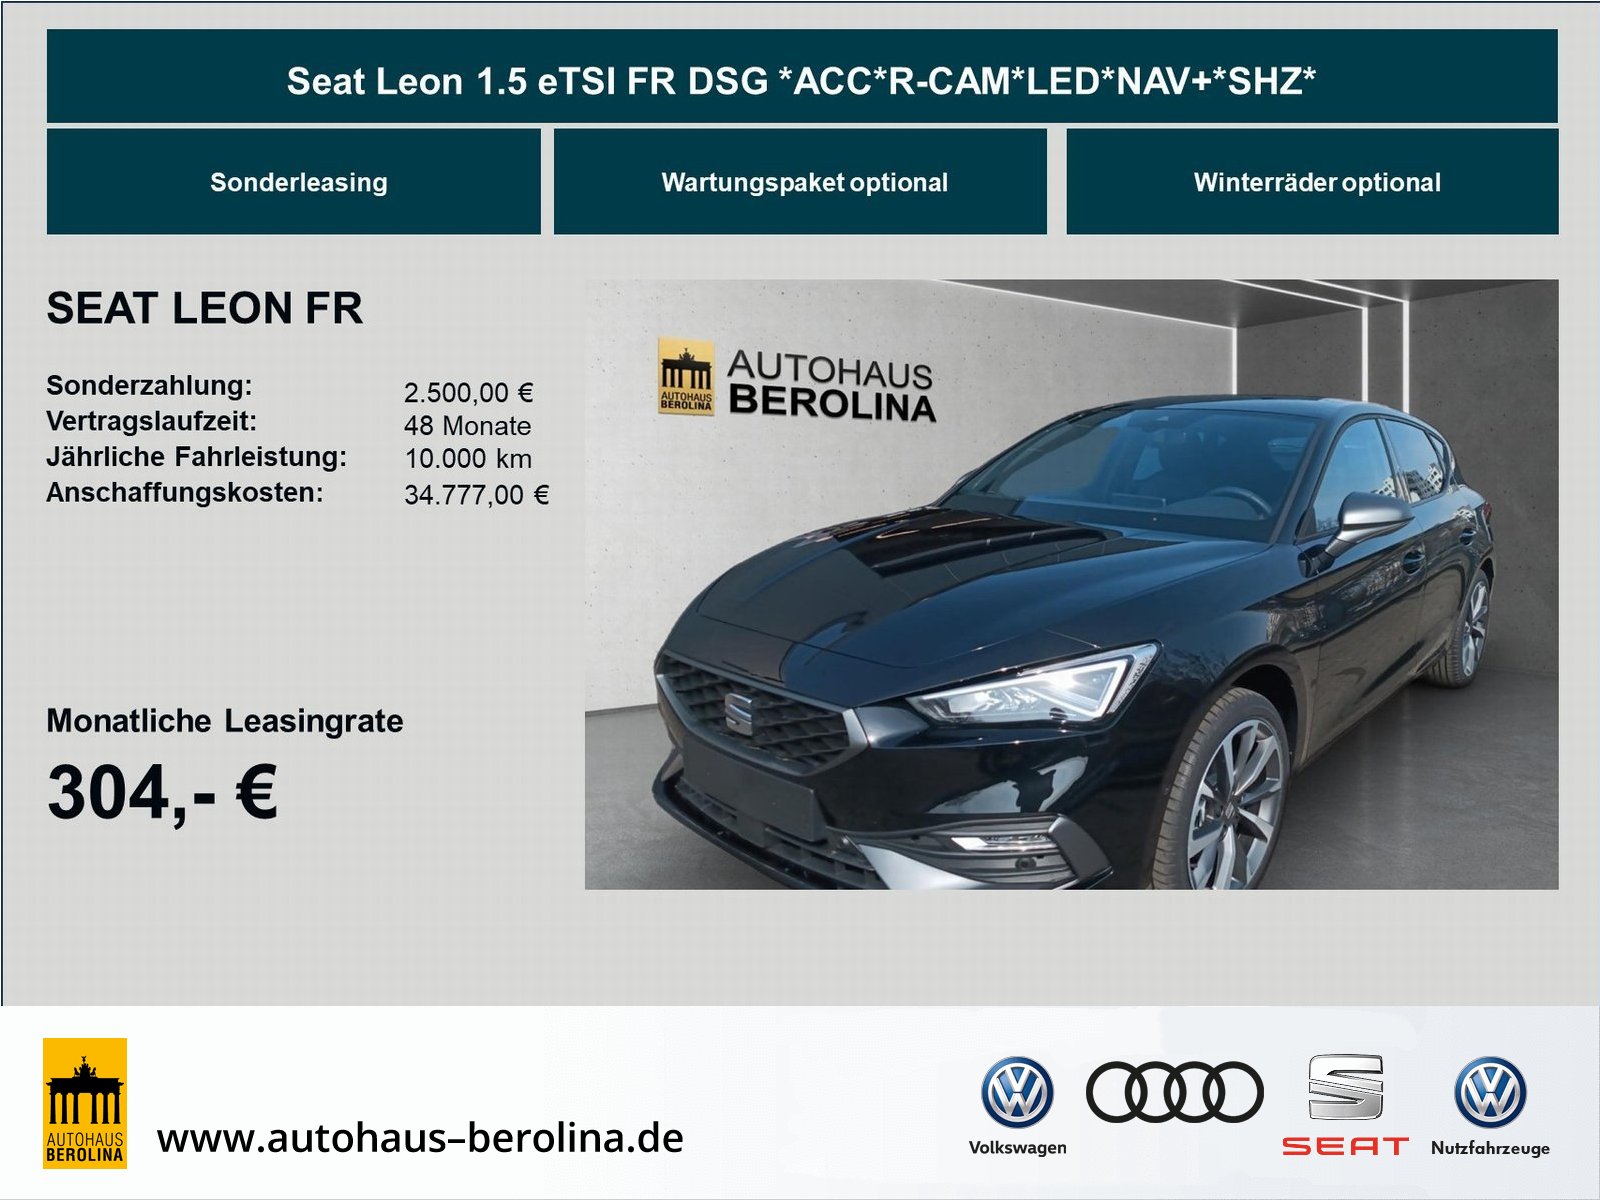 Seat Leon 1.5 eTSI FR R